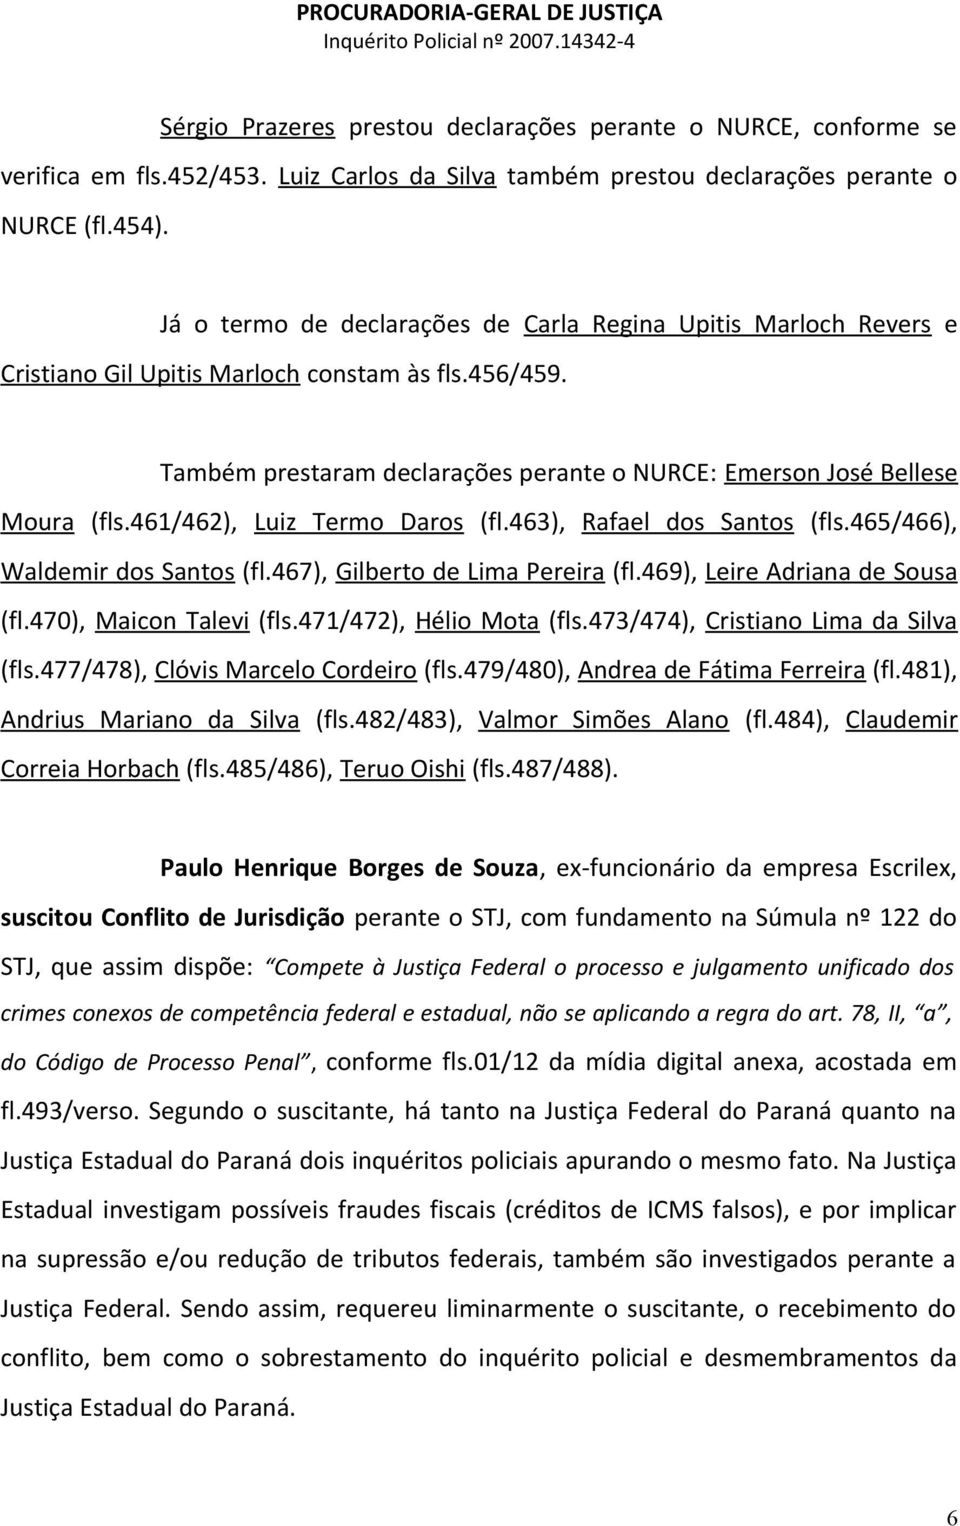 461/462), Luiz Termo Daros (fl.463), Rafael dos Santos (fls.465/466), Waldemir dos Santos (fl.467), Gilberto de Lima Pereira (fl.469), Leire Adriana de Sousa (fl.470), Maicon Talevi (fls.